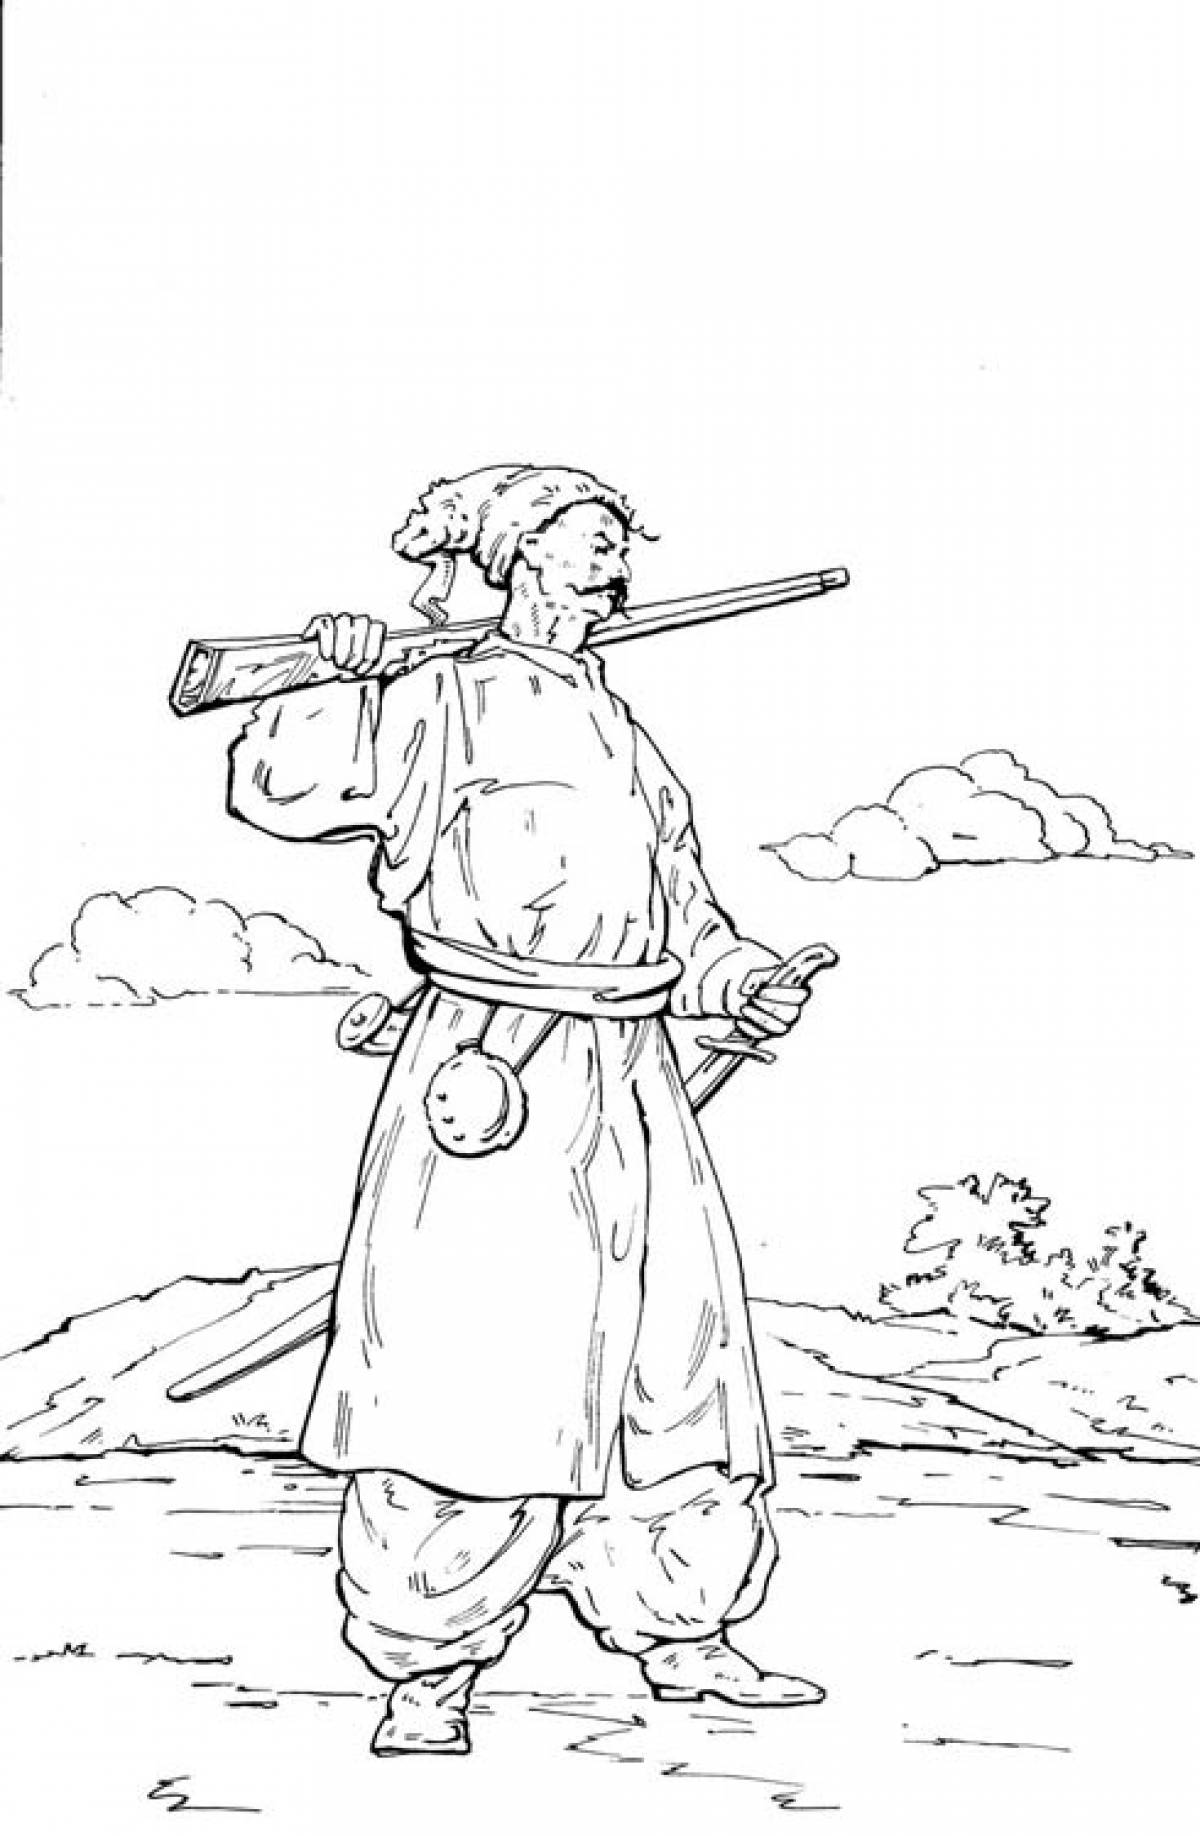 Cossack in the field